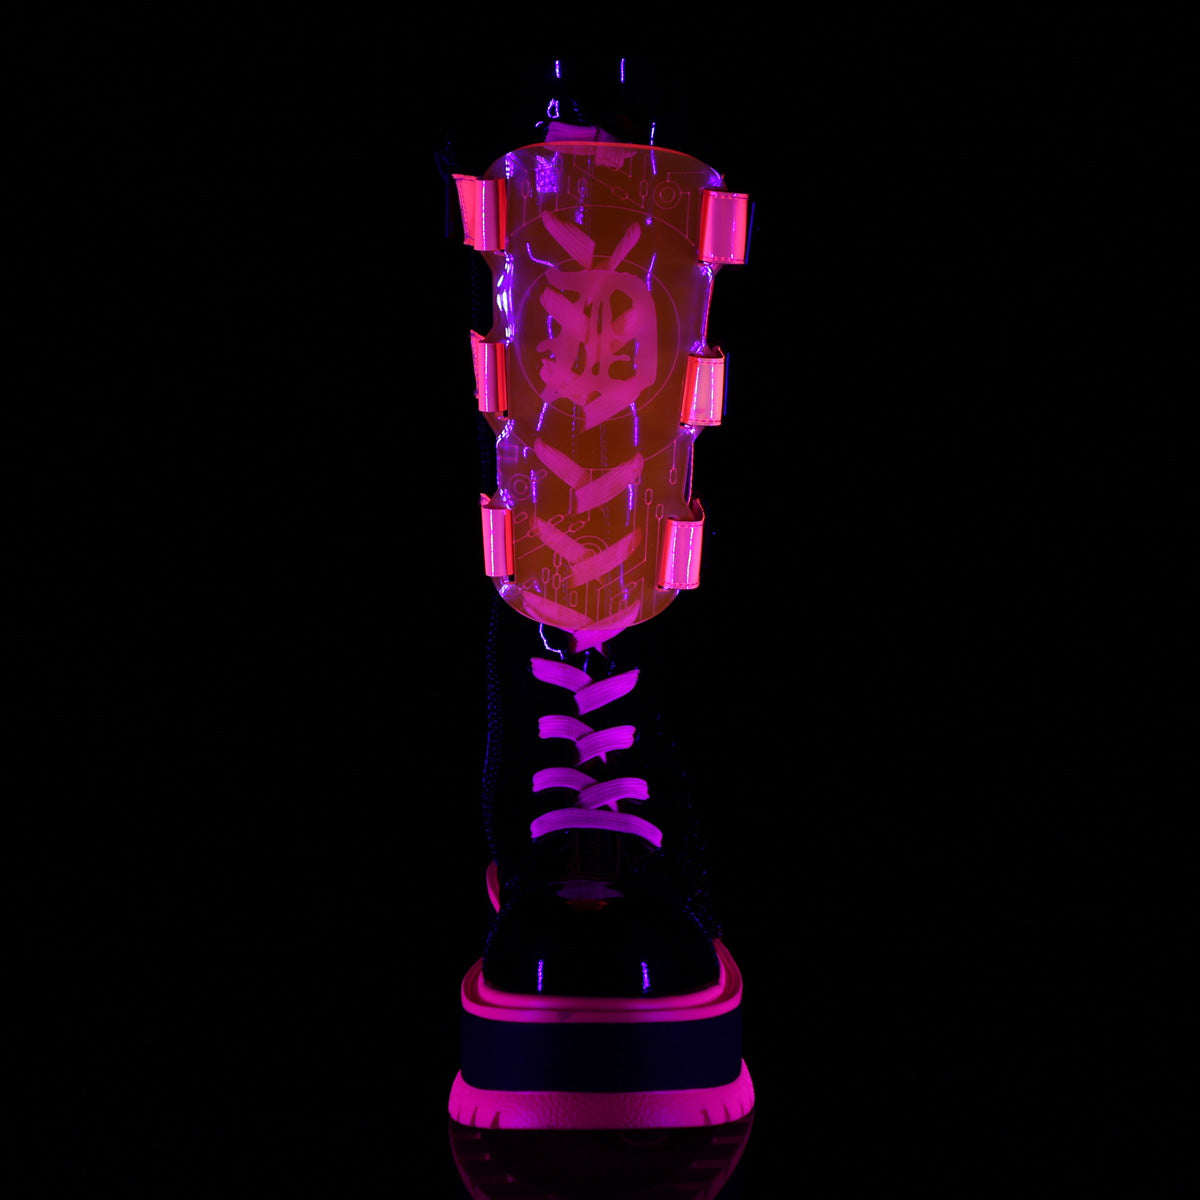 SLACKER-156 Black Patent-UV Neon Pink Mid-Calf Boot Demonia